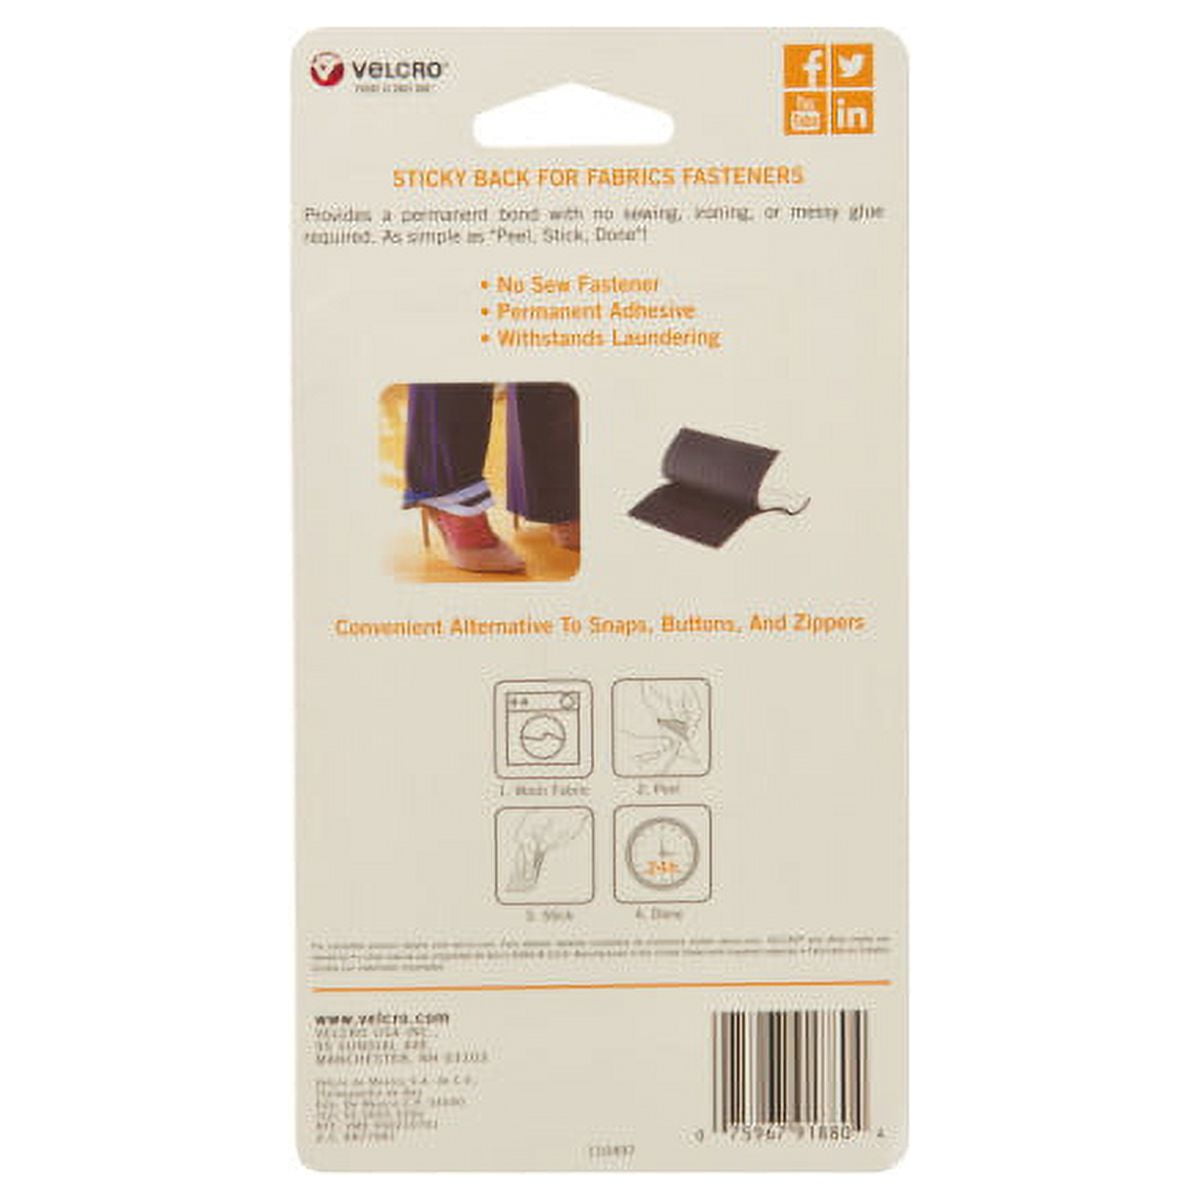 VELCRO Sticky Back Velcro for Fabric 6in x 4in Black Rectangle -  075967918804